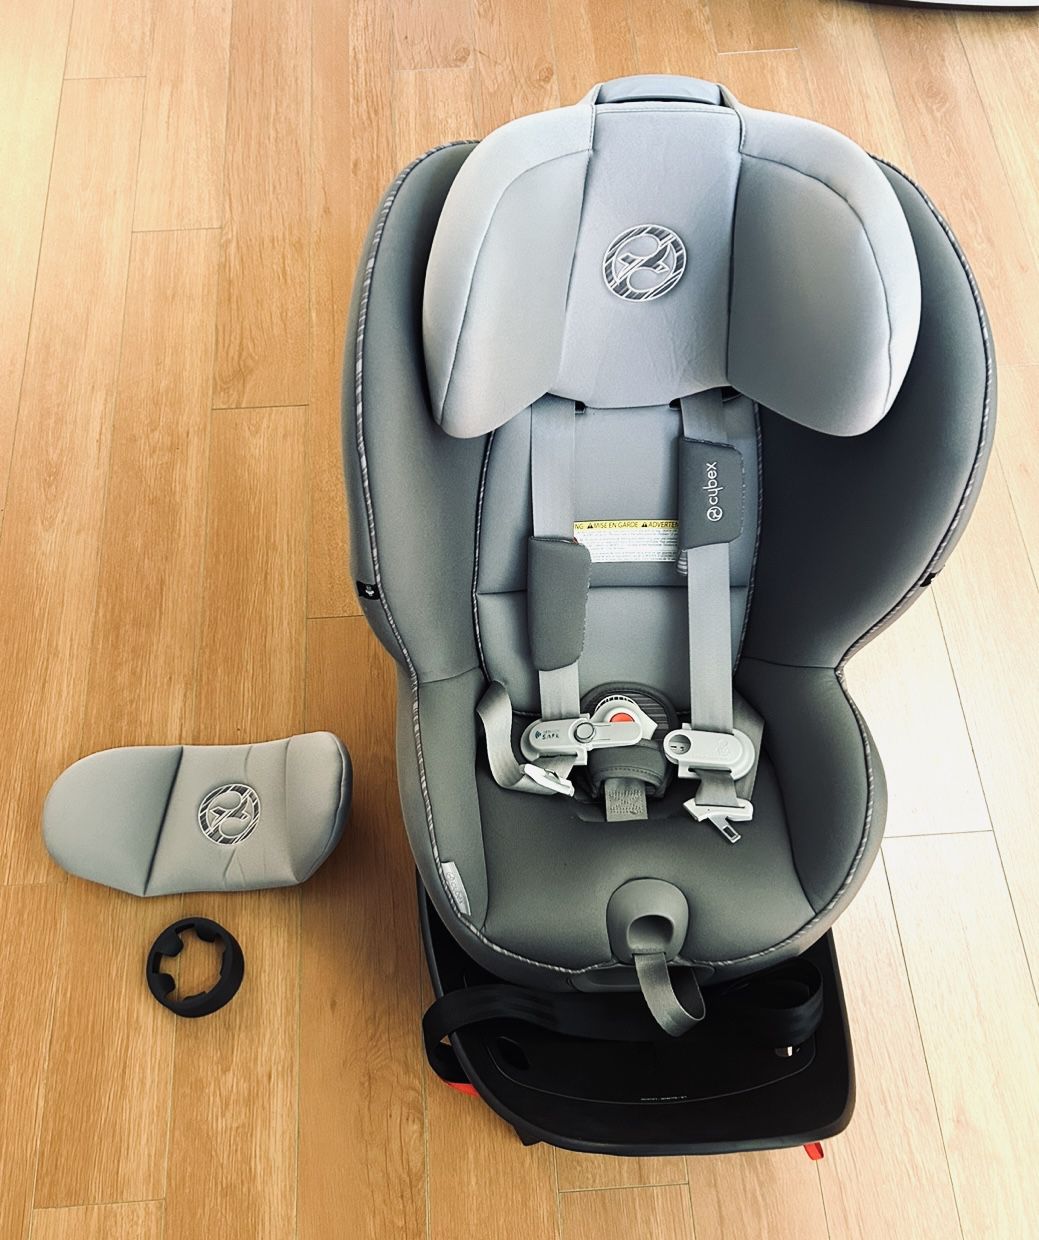 Convertible Baby Car Seat ($200)